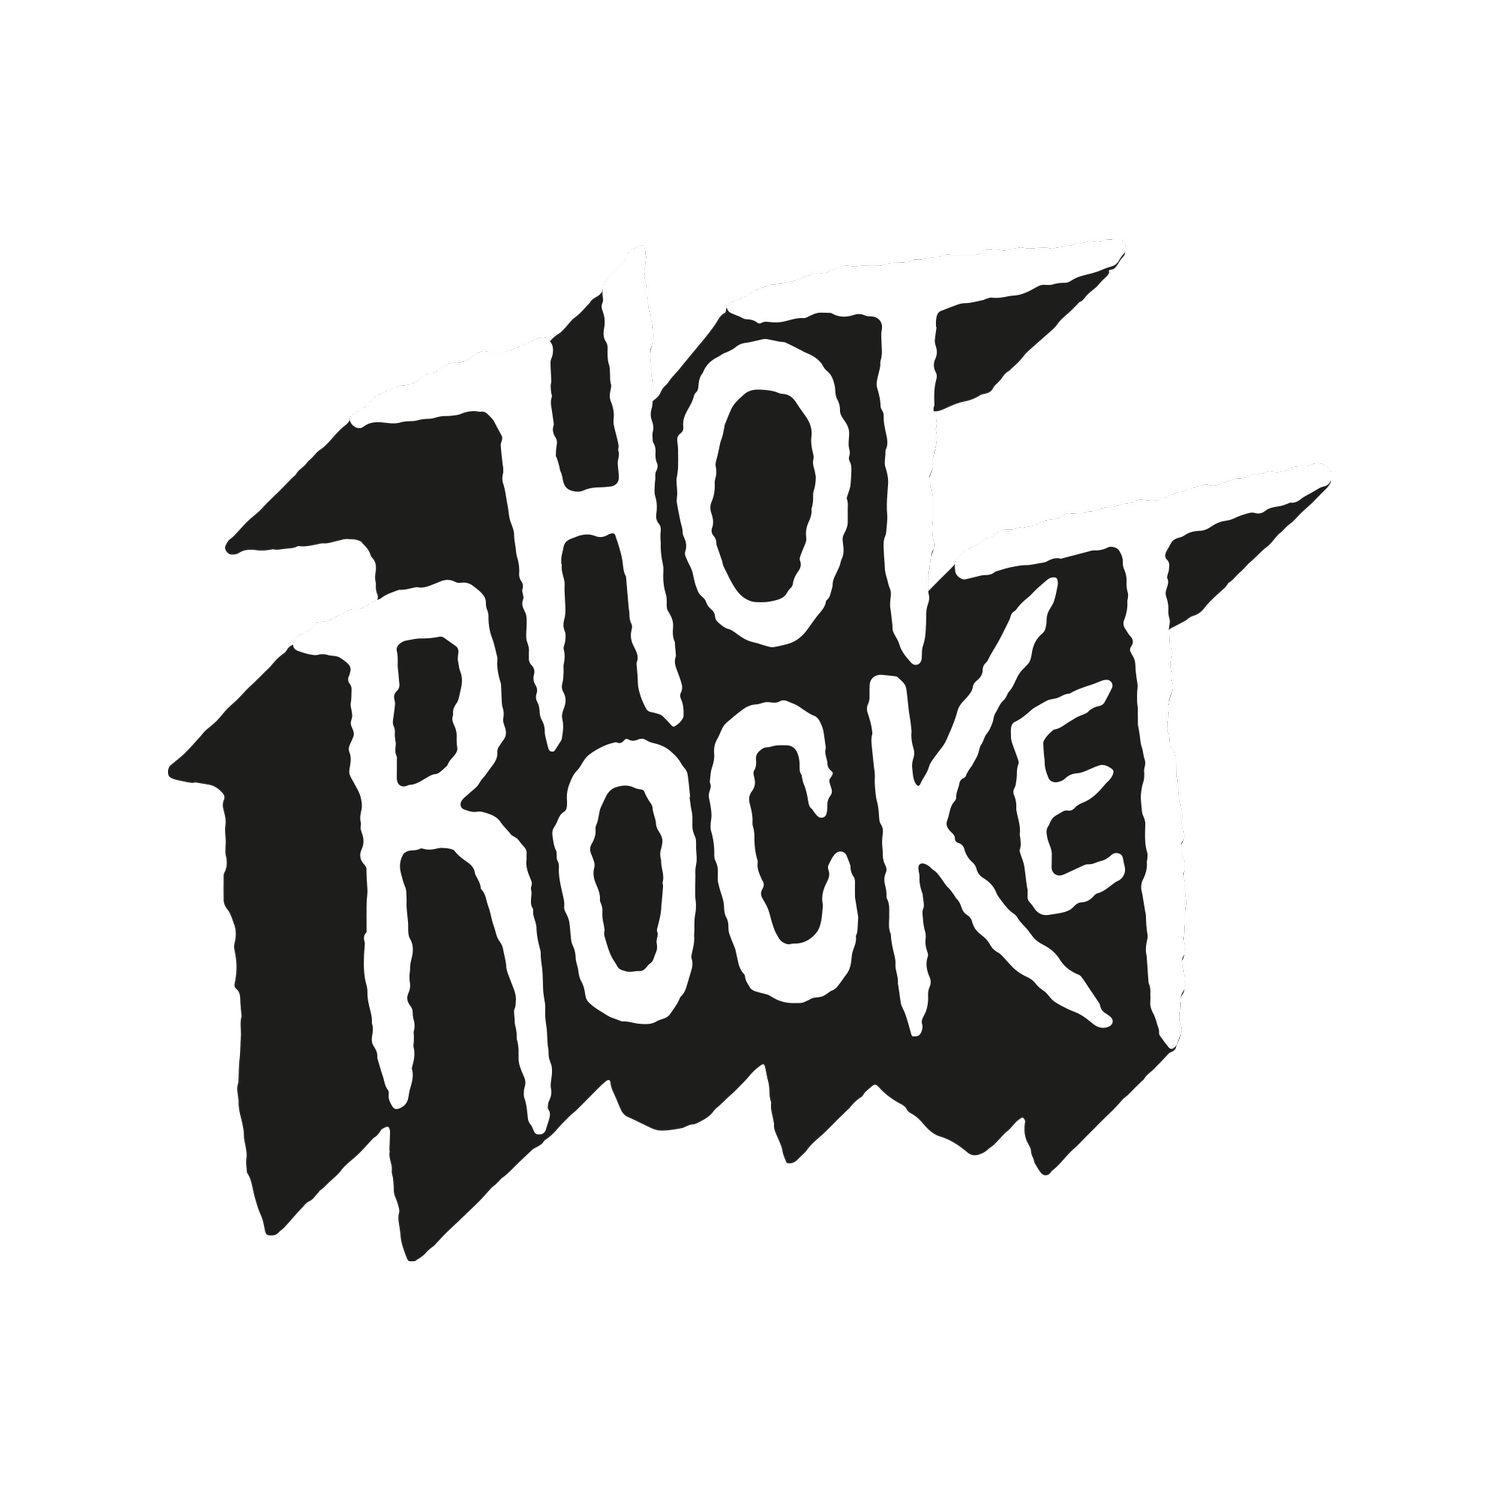 Hot Rocket